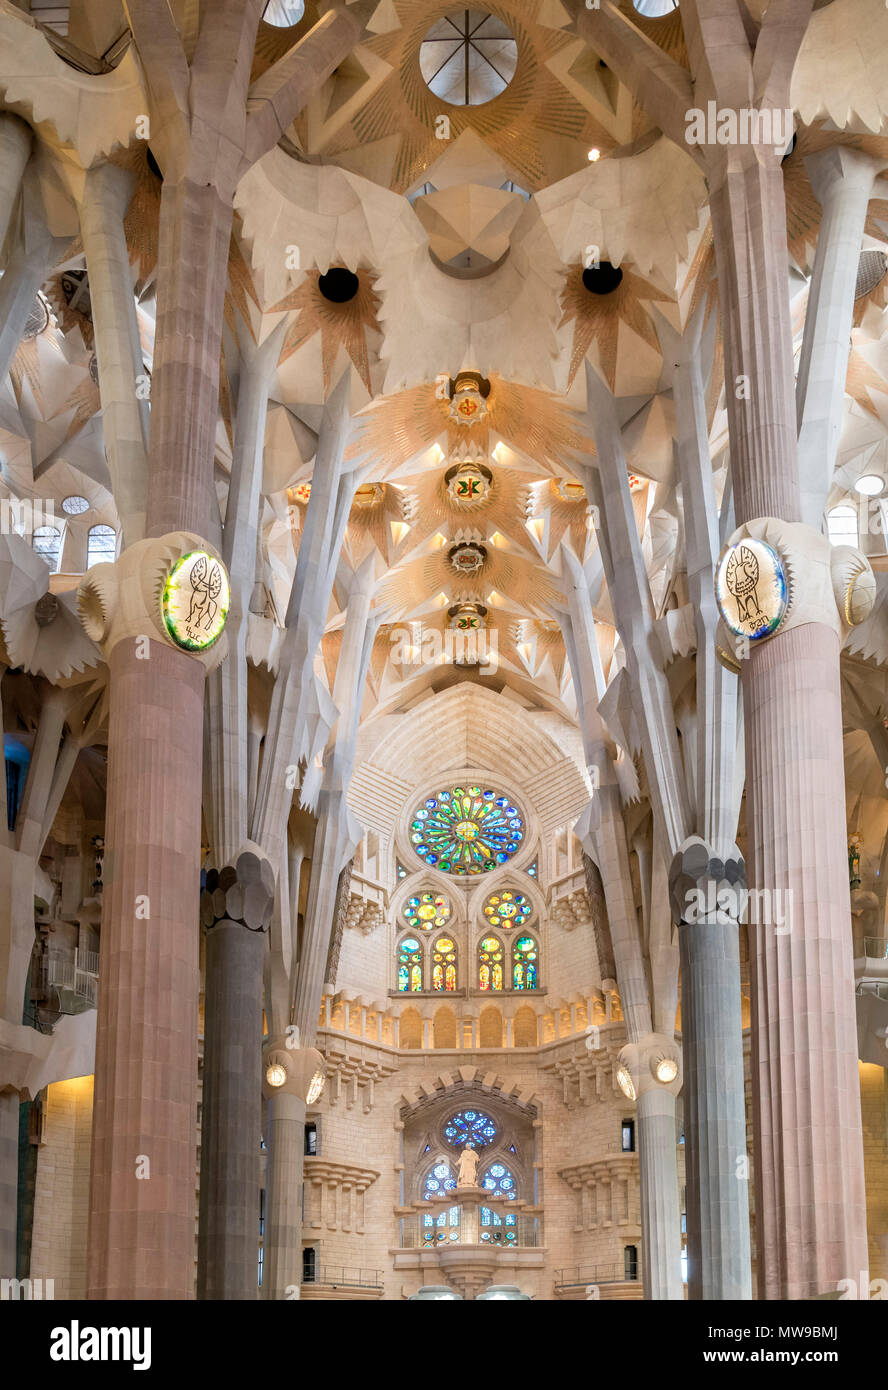 Barcelona, Sagrada Familia. Interior of the Gaudi designed basilica of ...